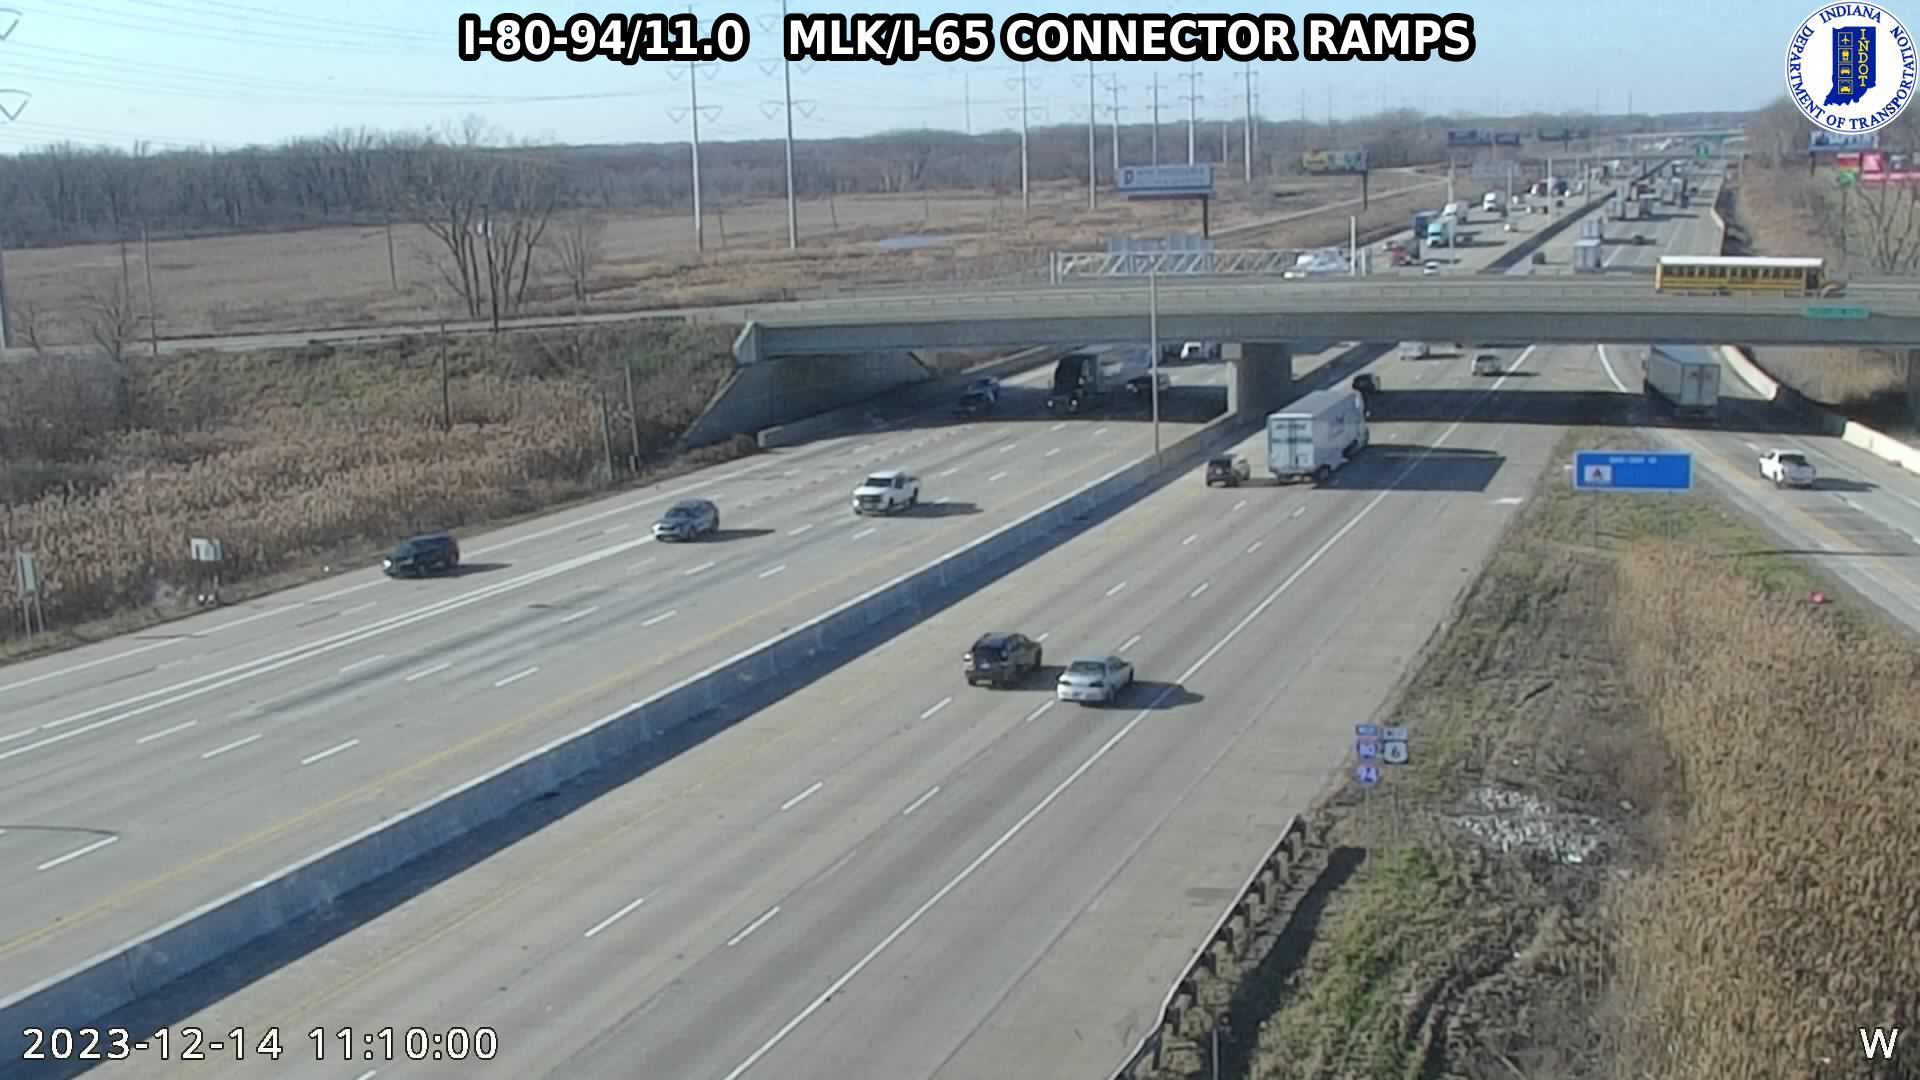 Traffic Cam Gary: I-94: I-80-94/11.0 MLK/I-65 CONNECTOR RAMPS Player